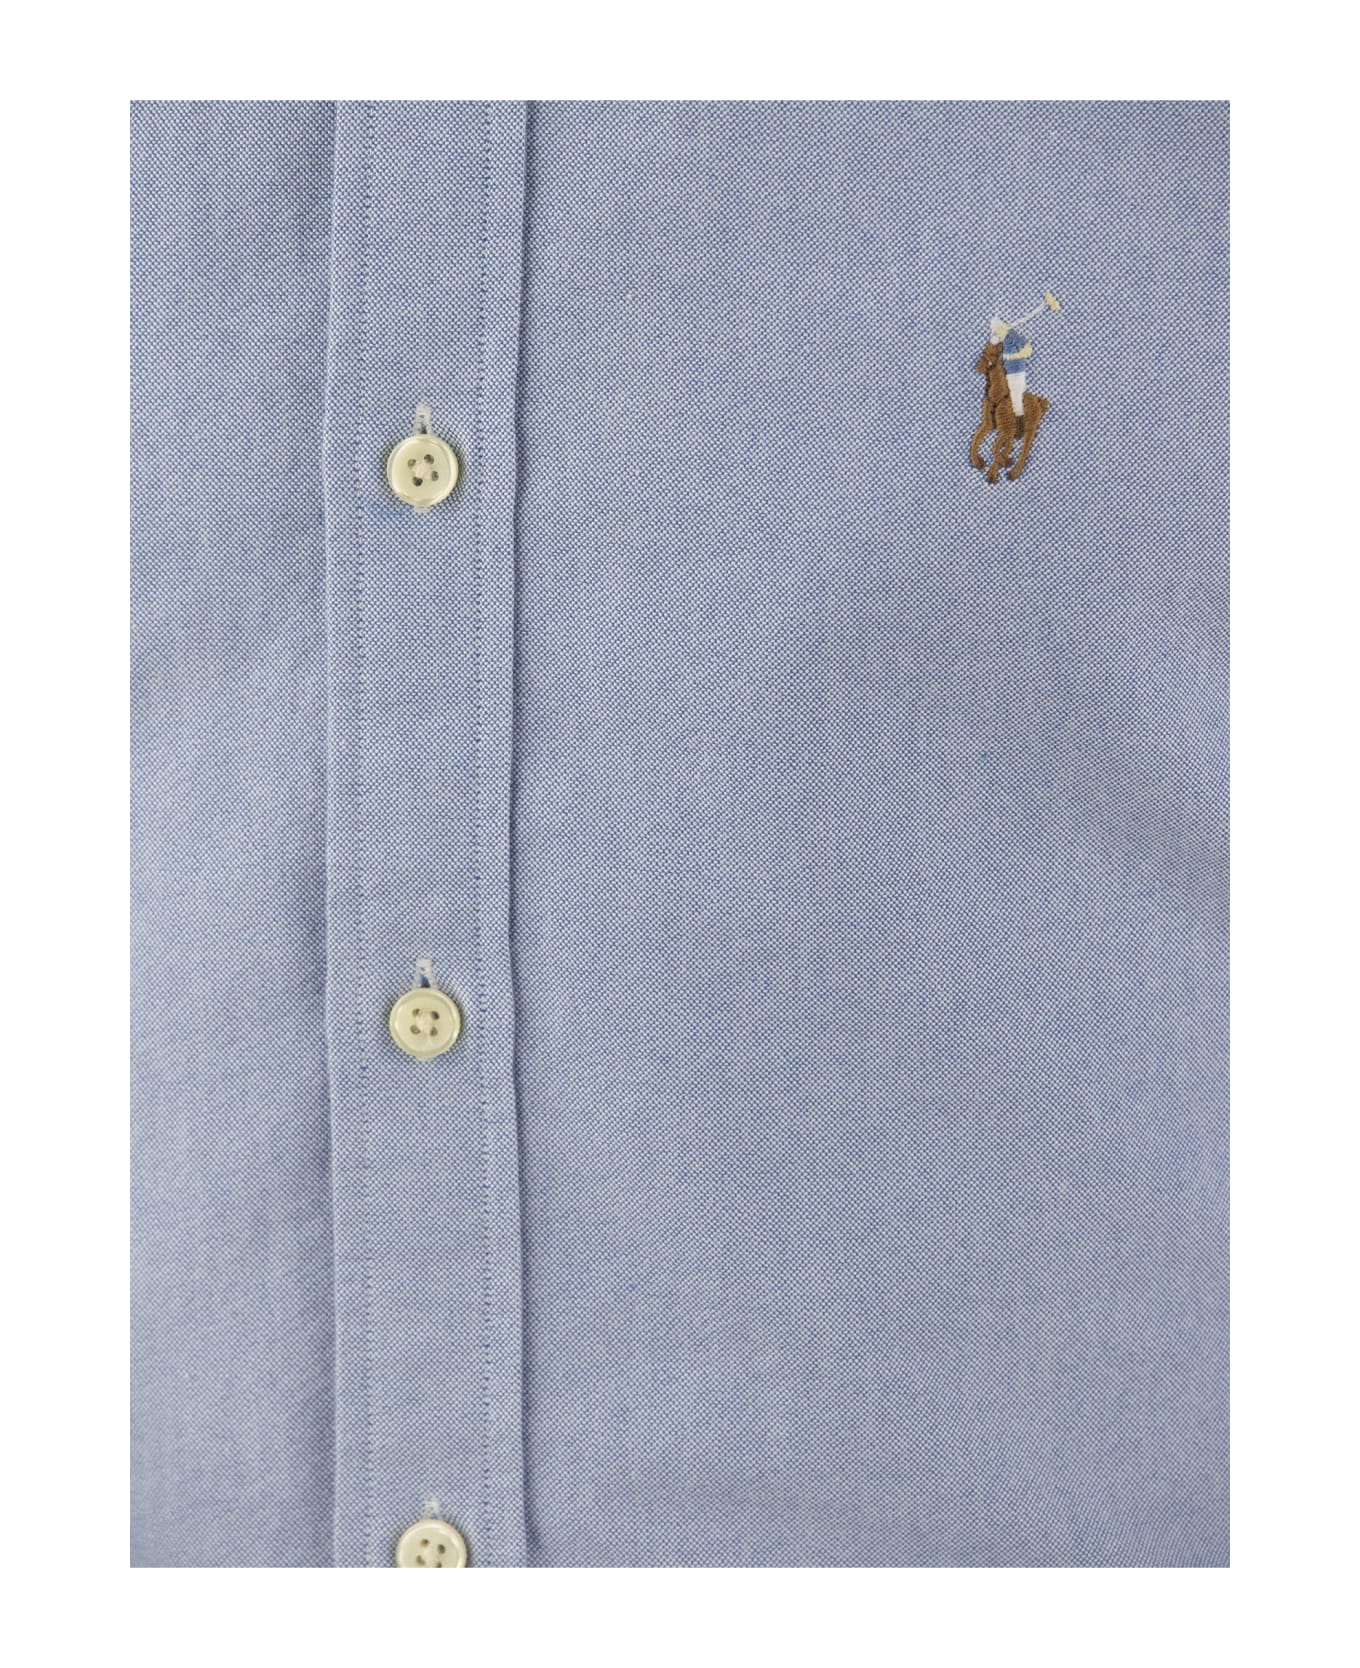 Ralph Lauren Slim-fit Oxford Shirt